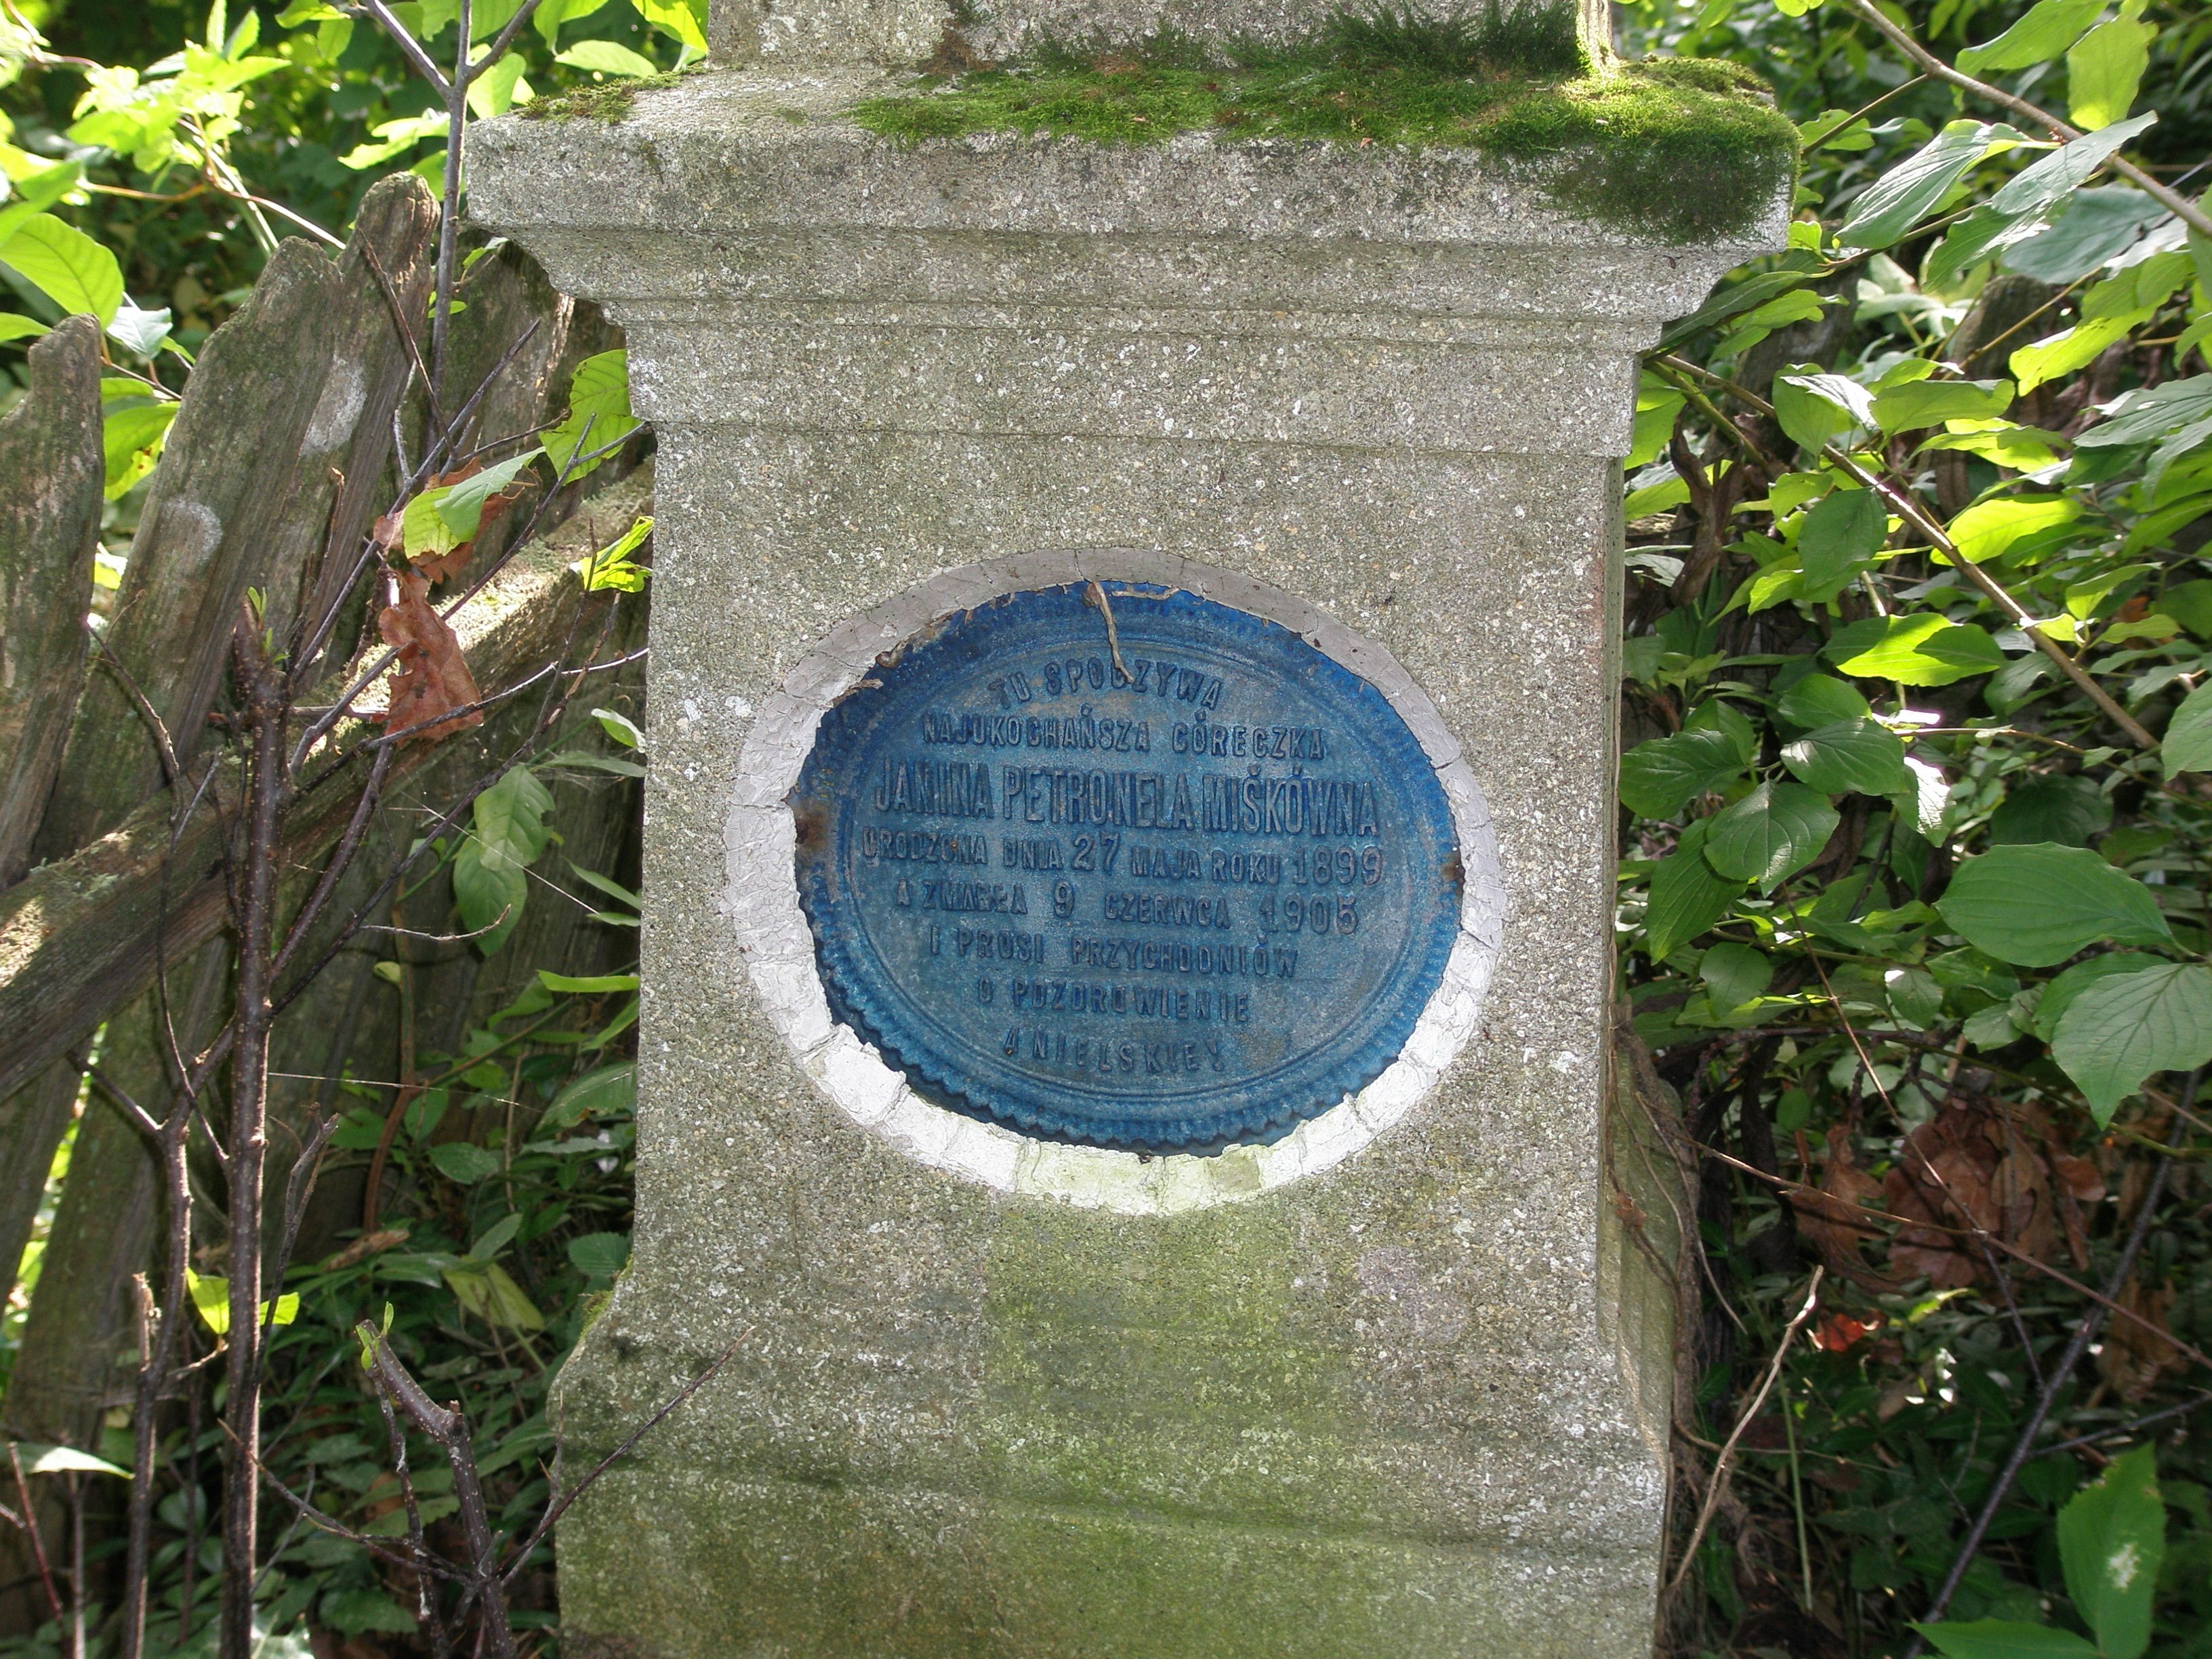 Gravestone inscription of Janina Petronela Miś, as of 2006